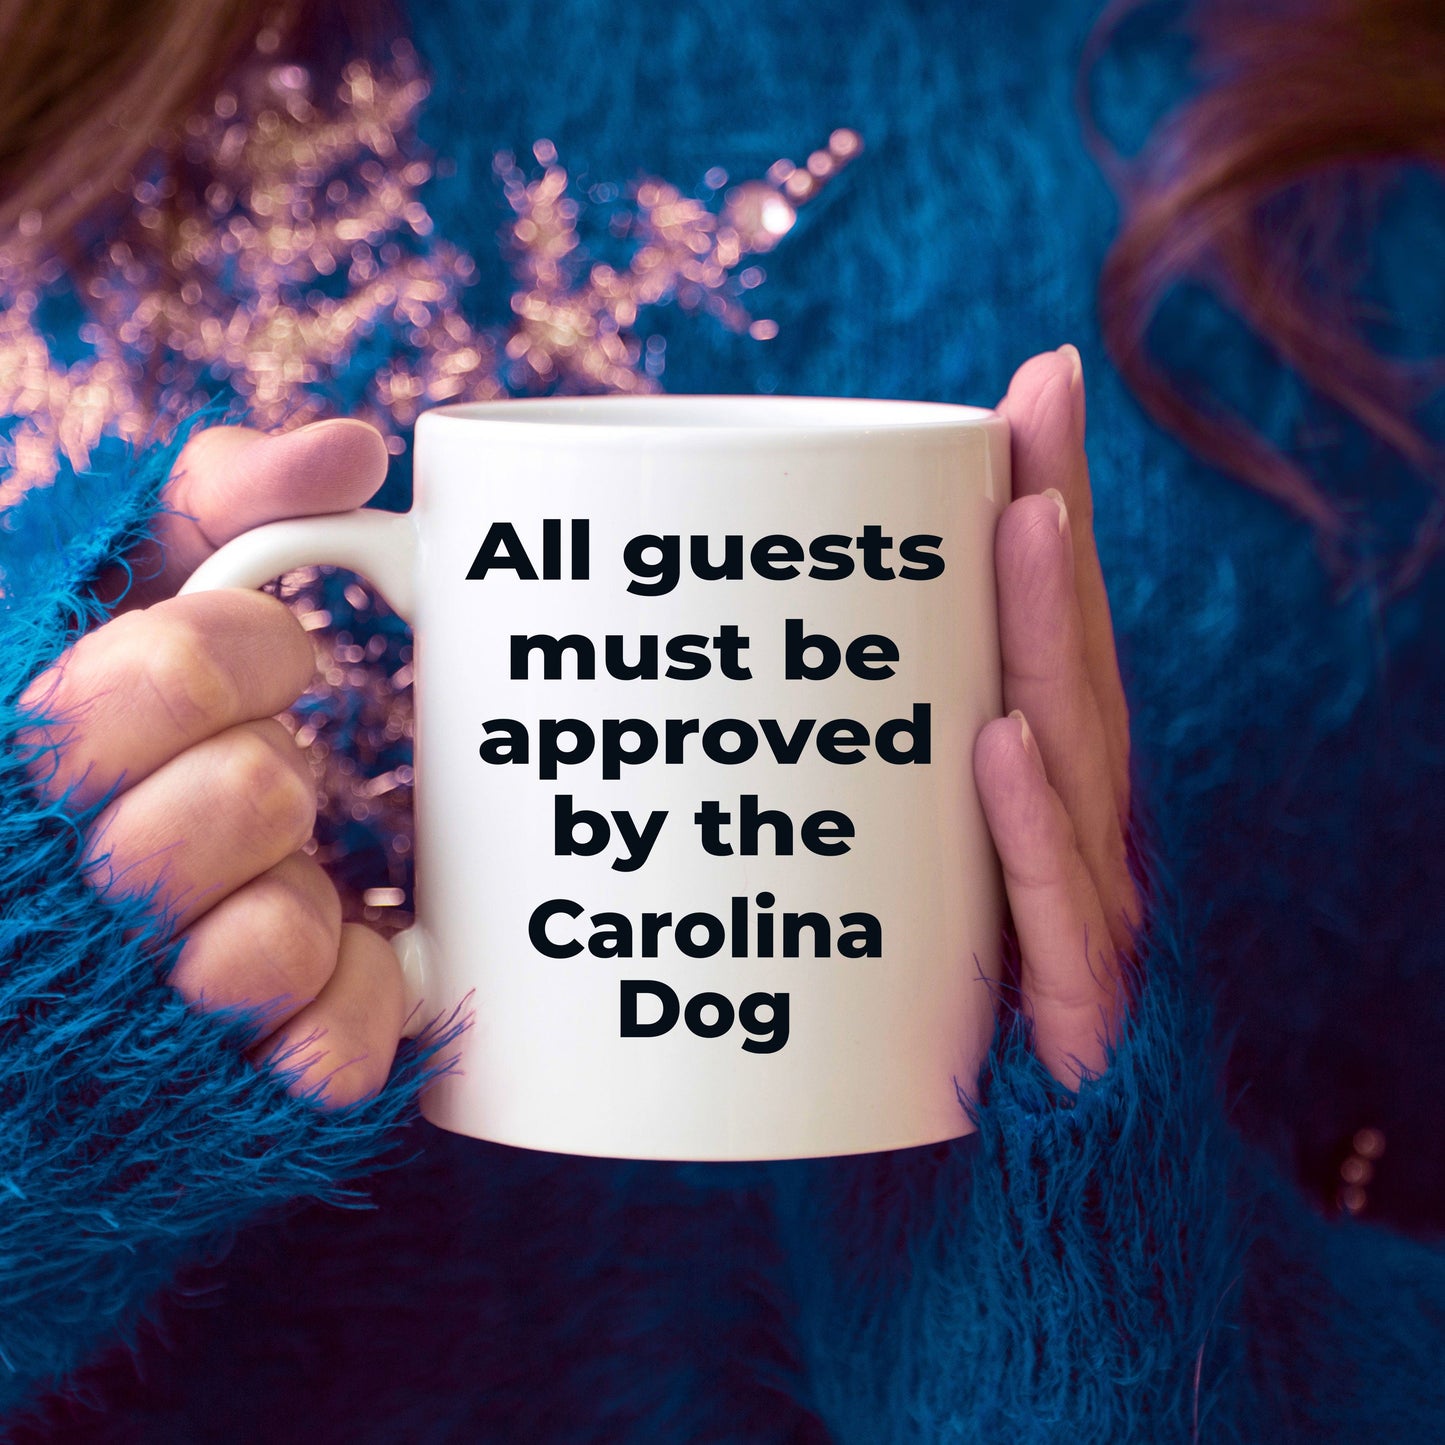 Carolina Dog Funny Coffee Mug - All guests must be approved by the Carolina Dog